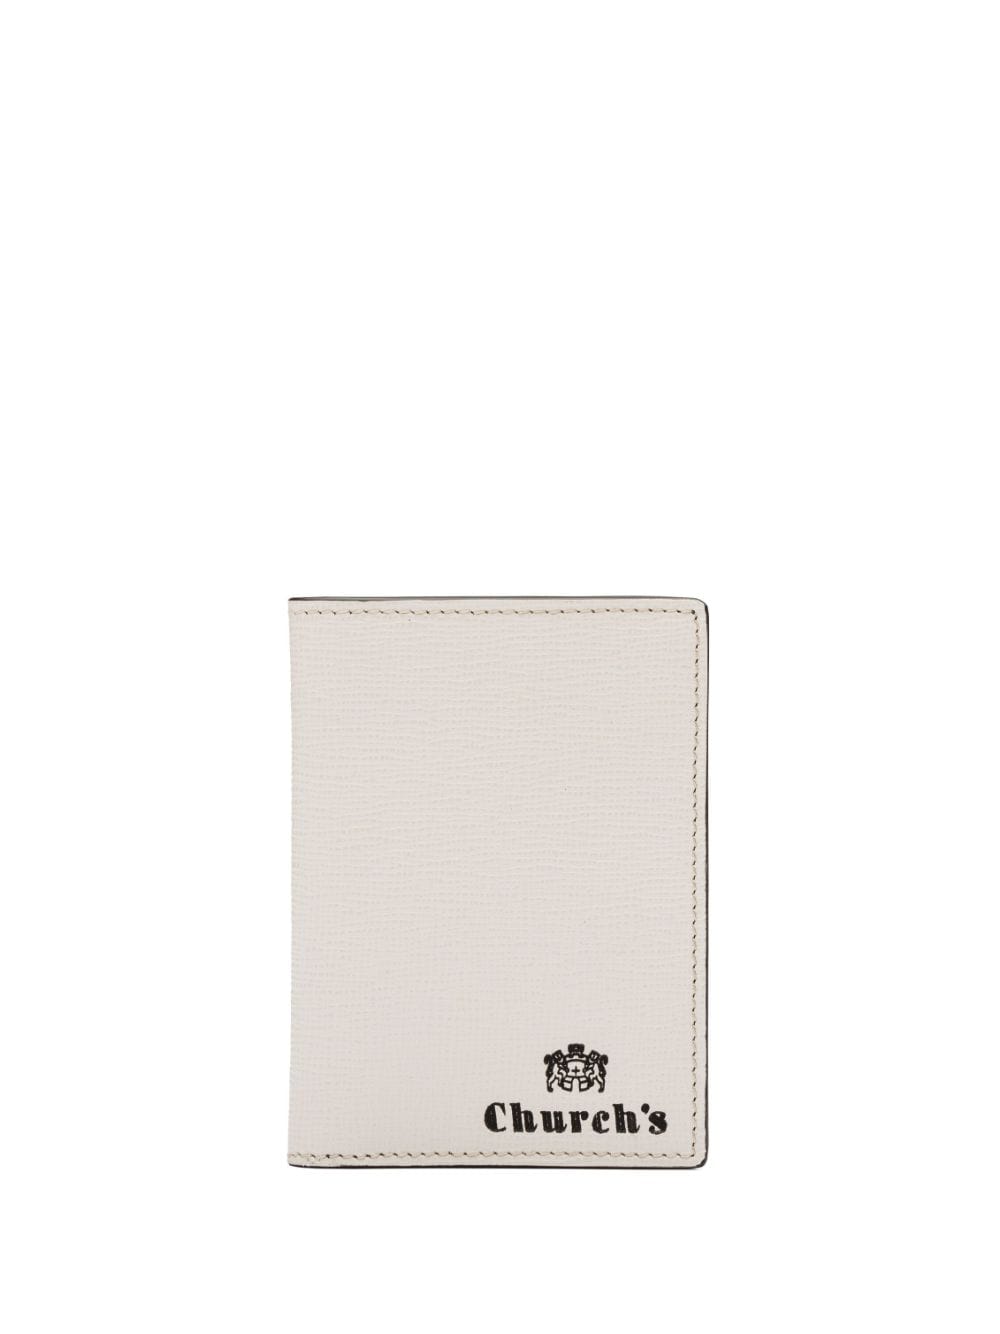 Church's St James bi-fold leather card holder - White von Church's